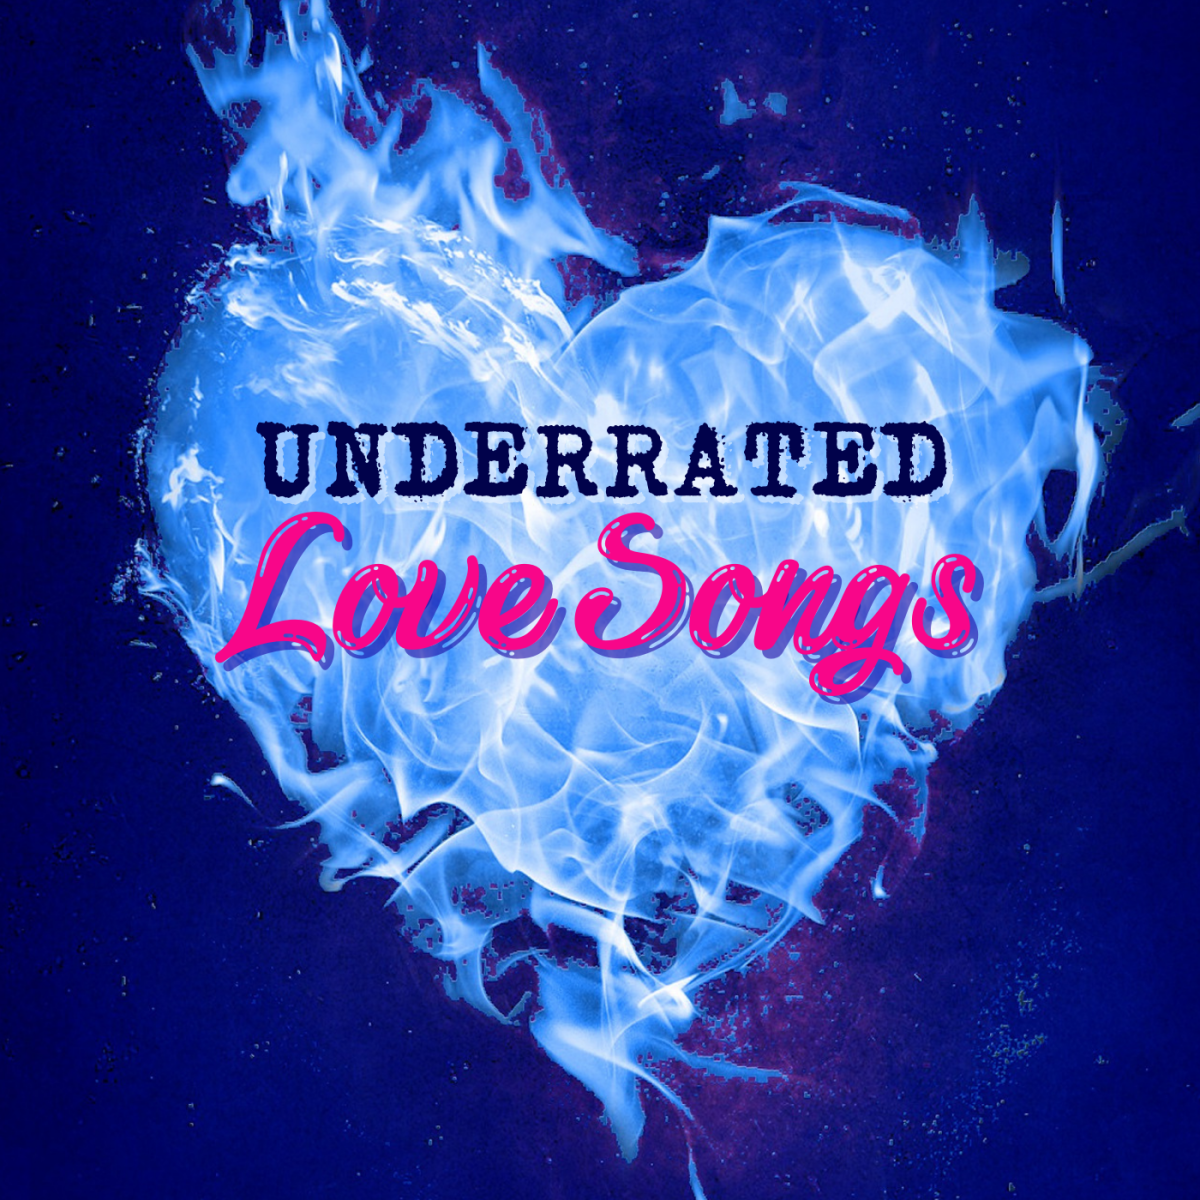 The Top Ten Underrated Love Songs